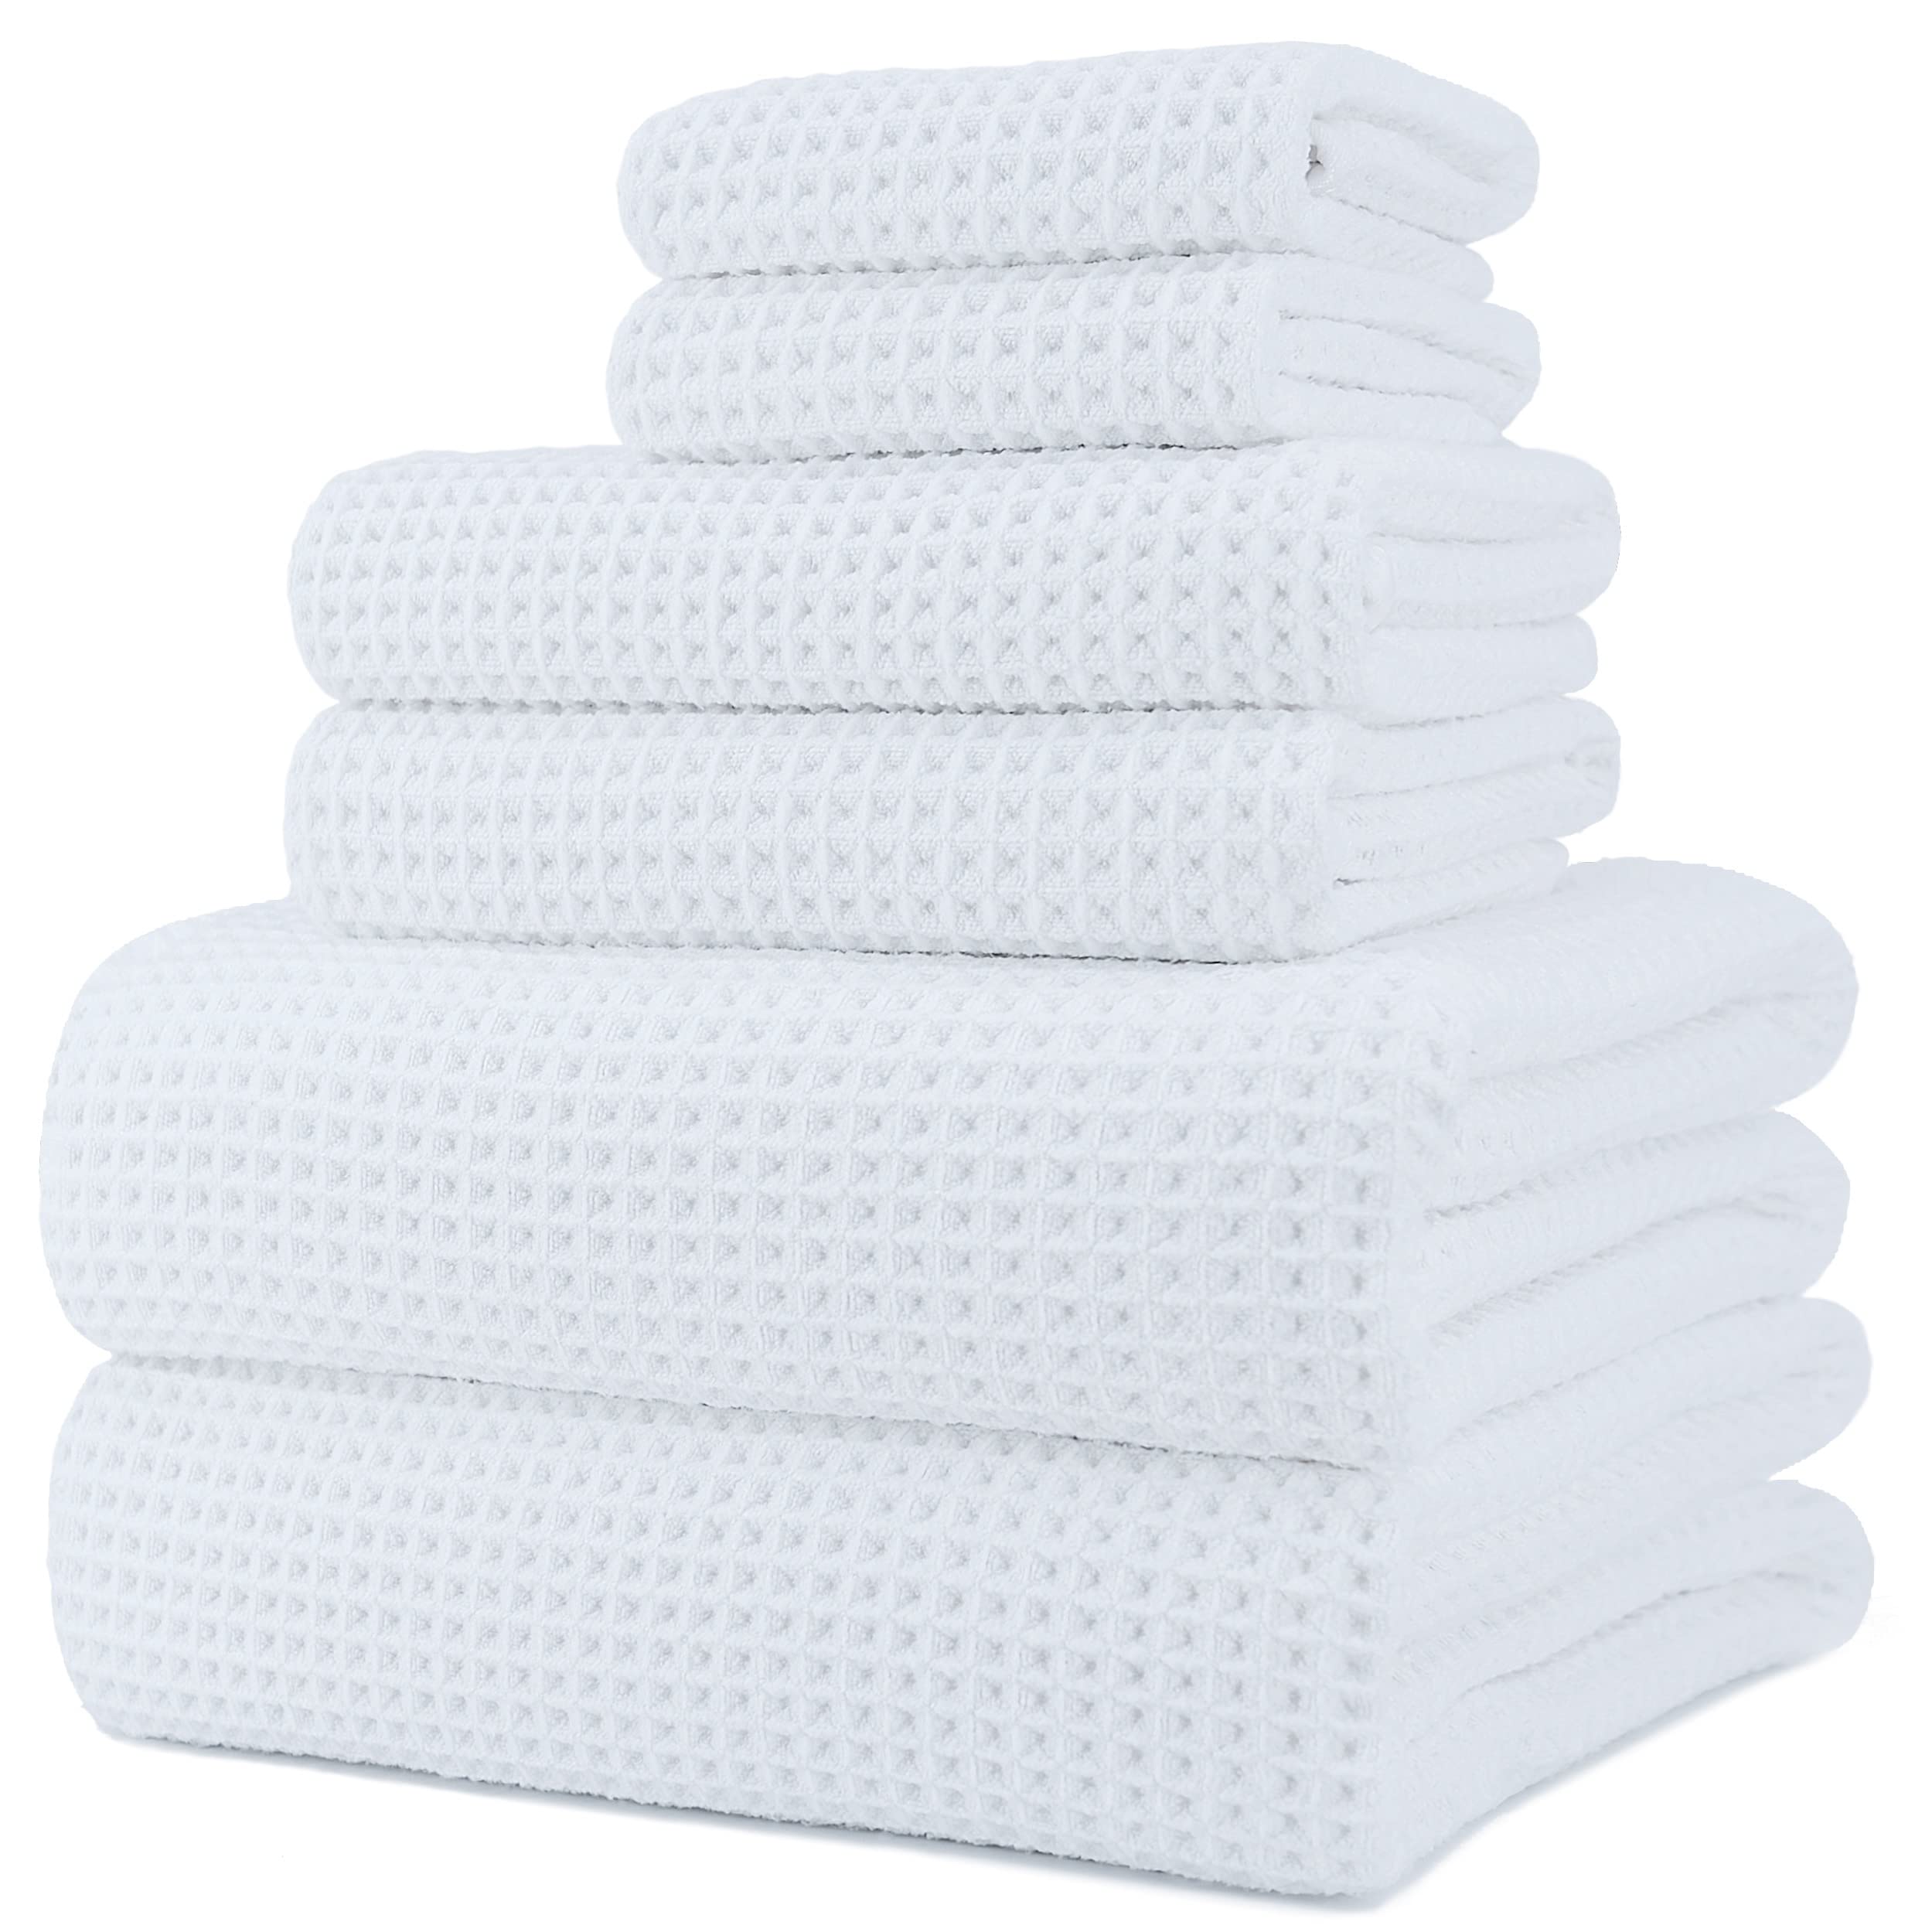 POLYTE Oversize, 60 x 30 in, Quick Dry Lint Free Microfiber Bath Towel Set,  6 Piece (Gray)